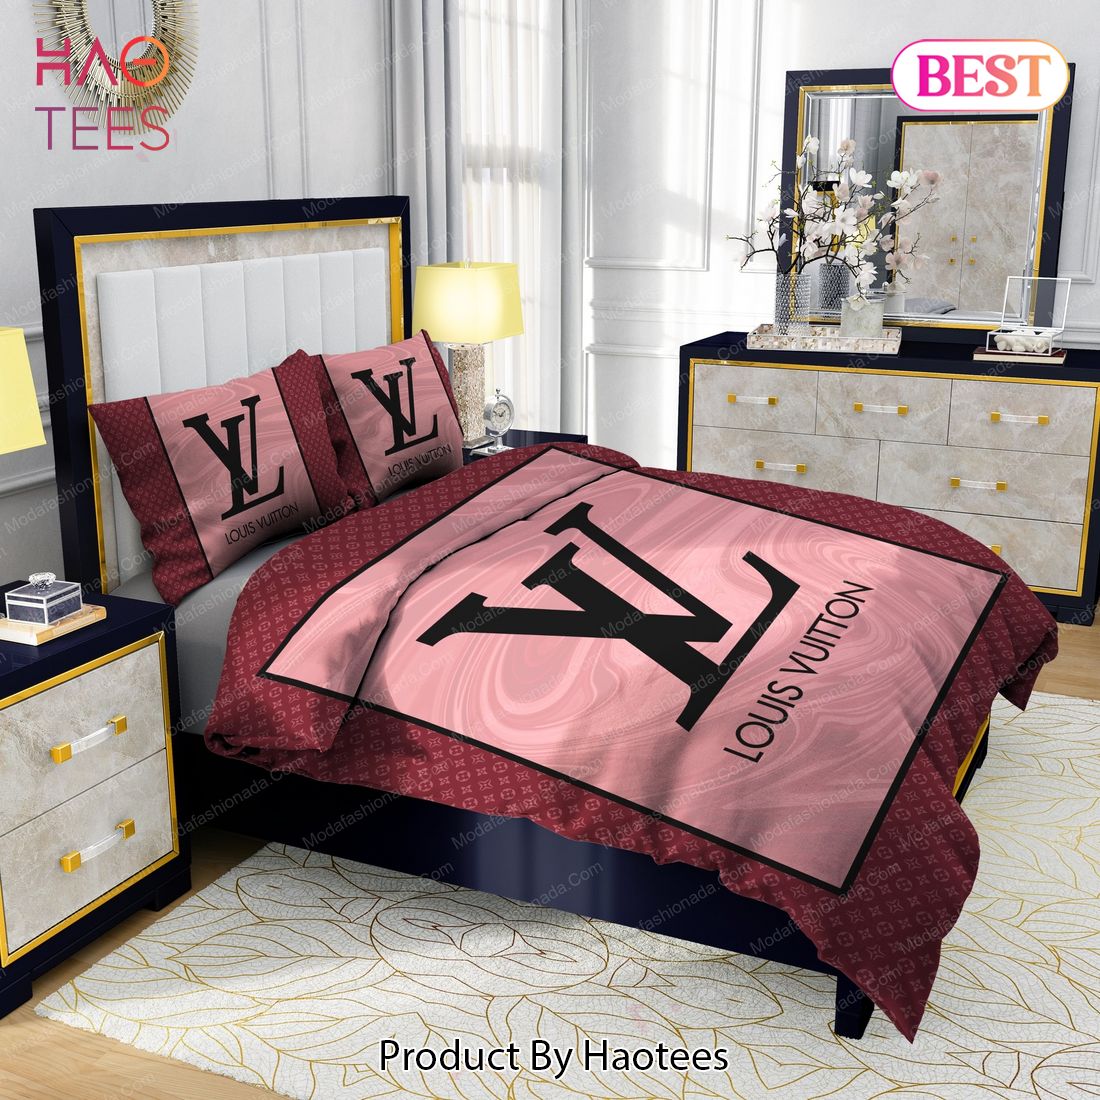 Best Louis Vuitton Grey and Pink Monogram Bedding Set - REVER LAVIE